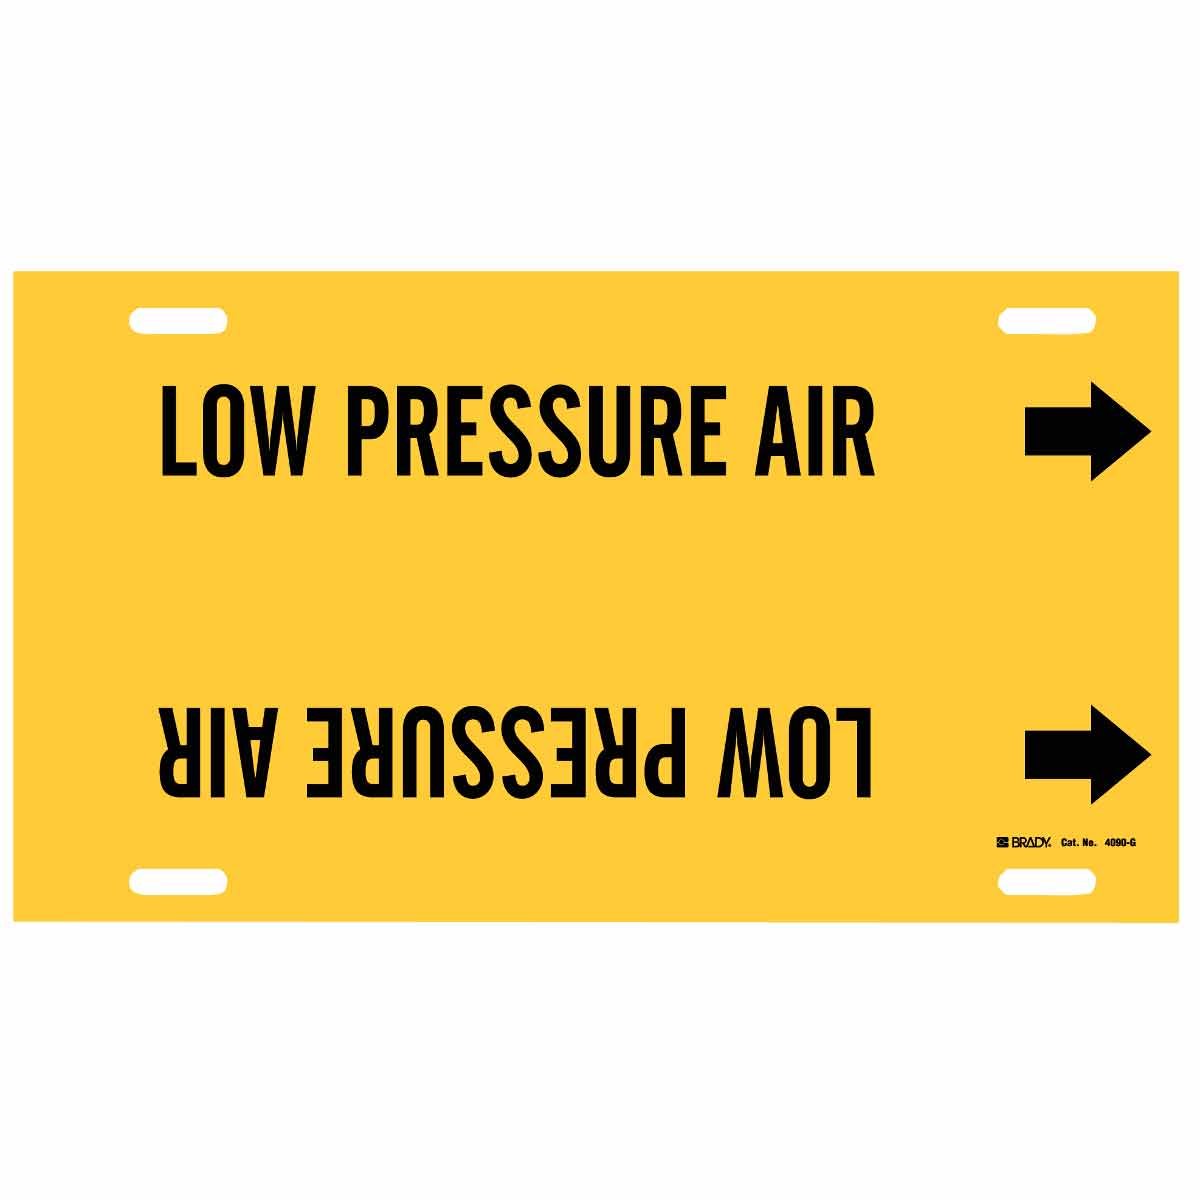 Legend Low Pressure Air Legend Low Pressure Air B-915 Brady 4090-H Brady Strap-On Pipe Marker Black On Yellow Printed Plastic Sheet 